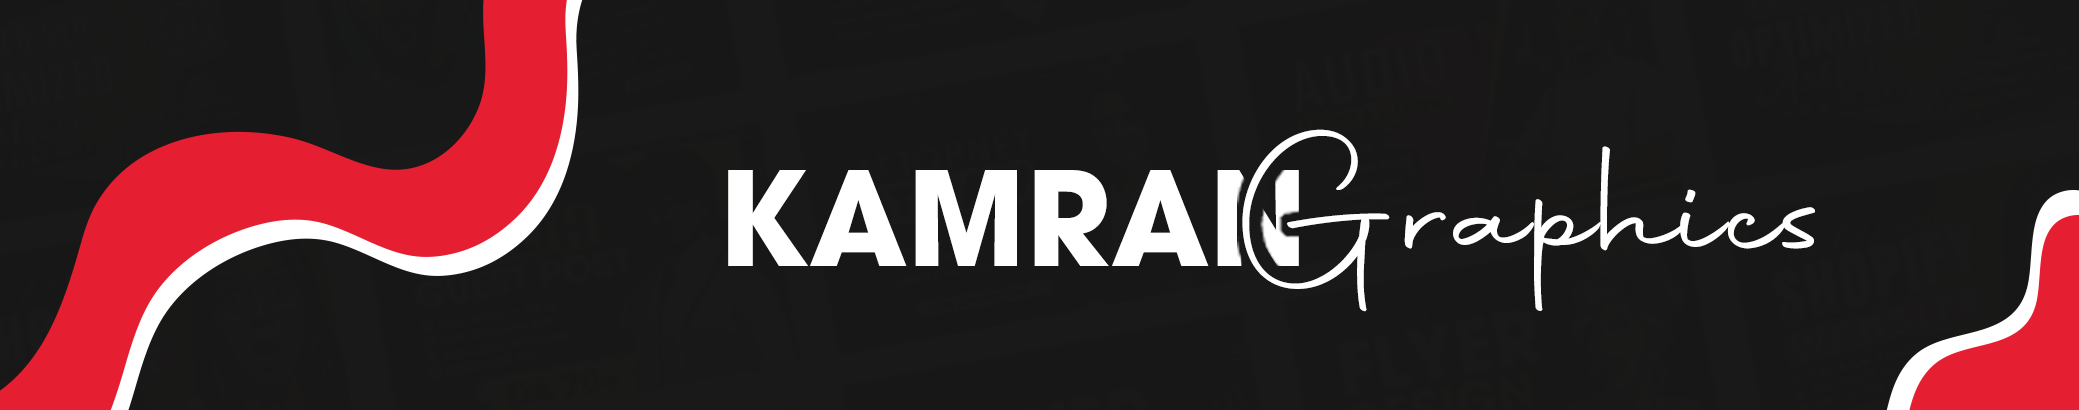 Kamran Graphics's profile banner